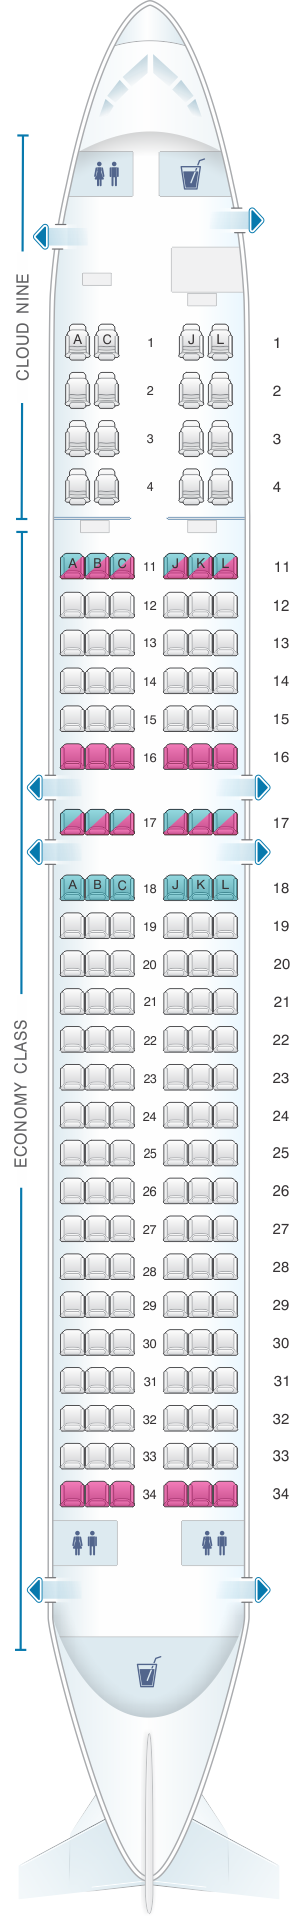 Seat map for Ethiopian Boeing B737 800W